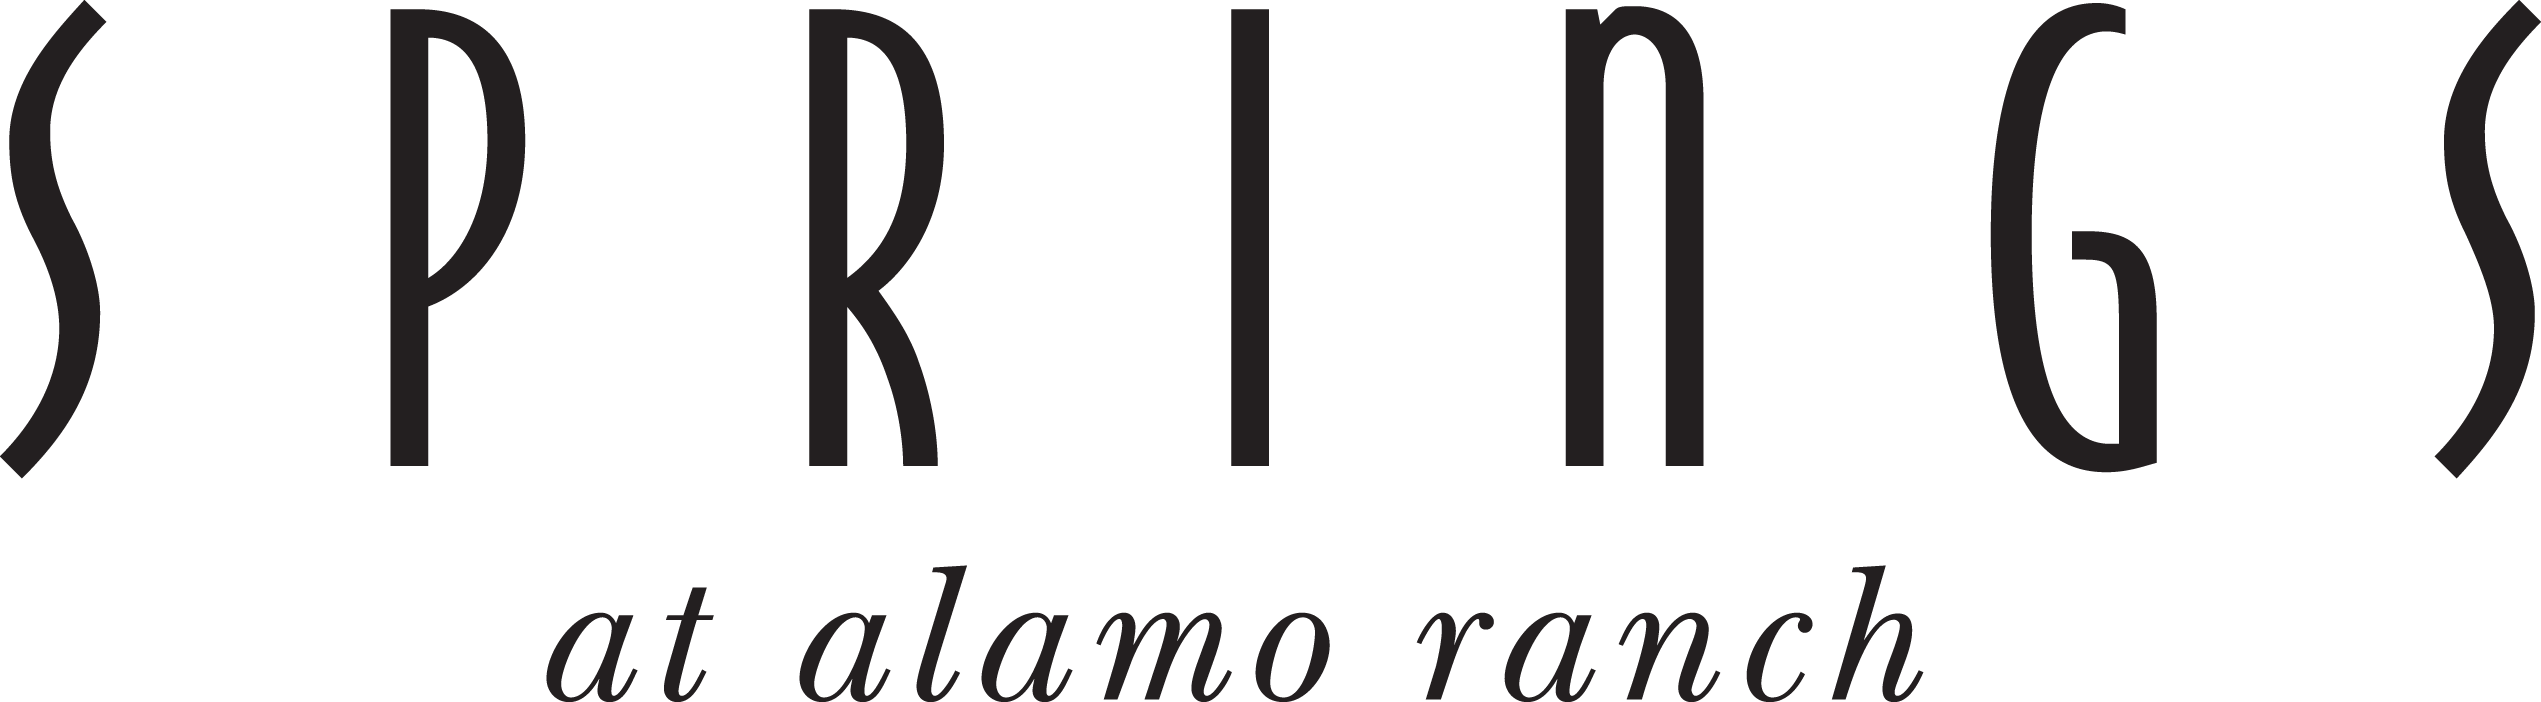 UPDATED Alamo Ranch Black Word Logo